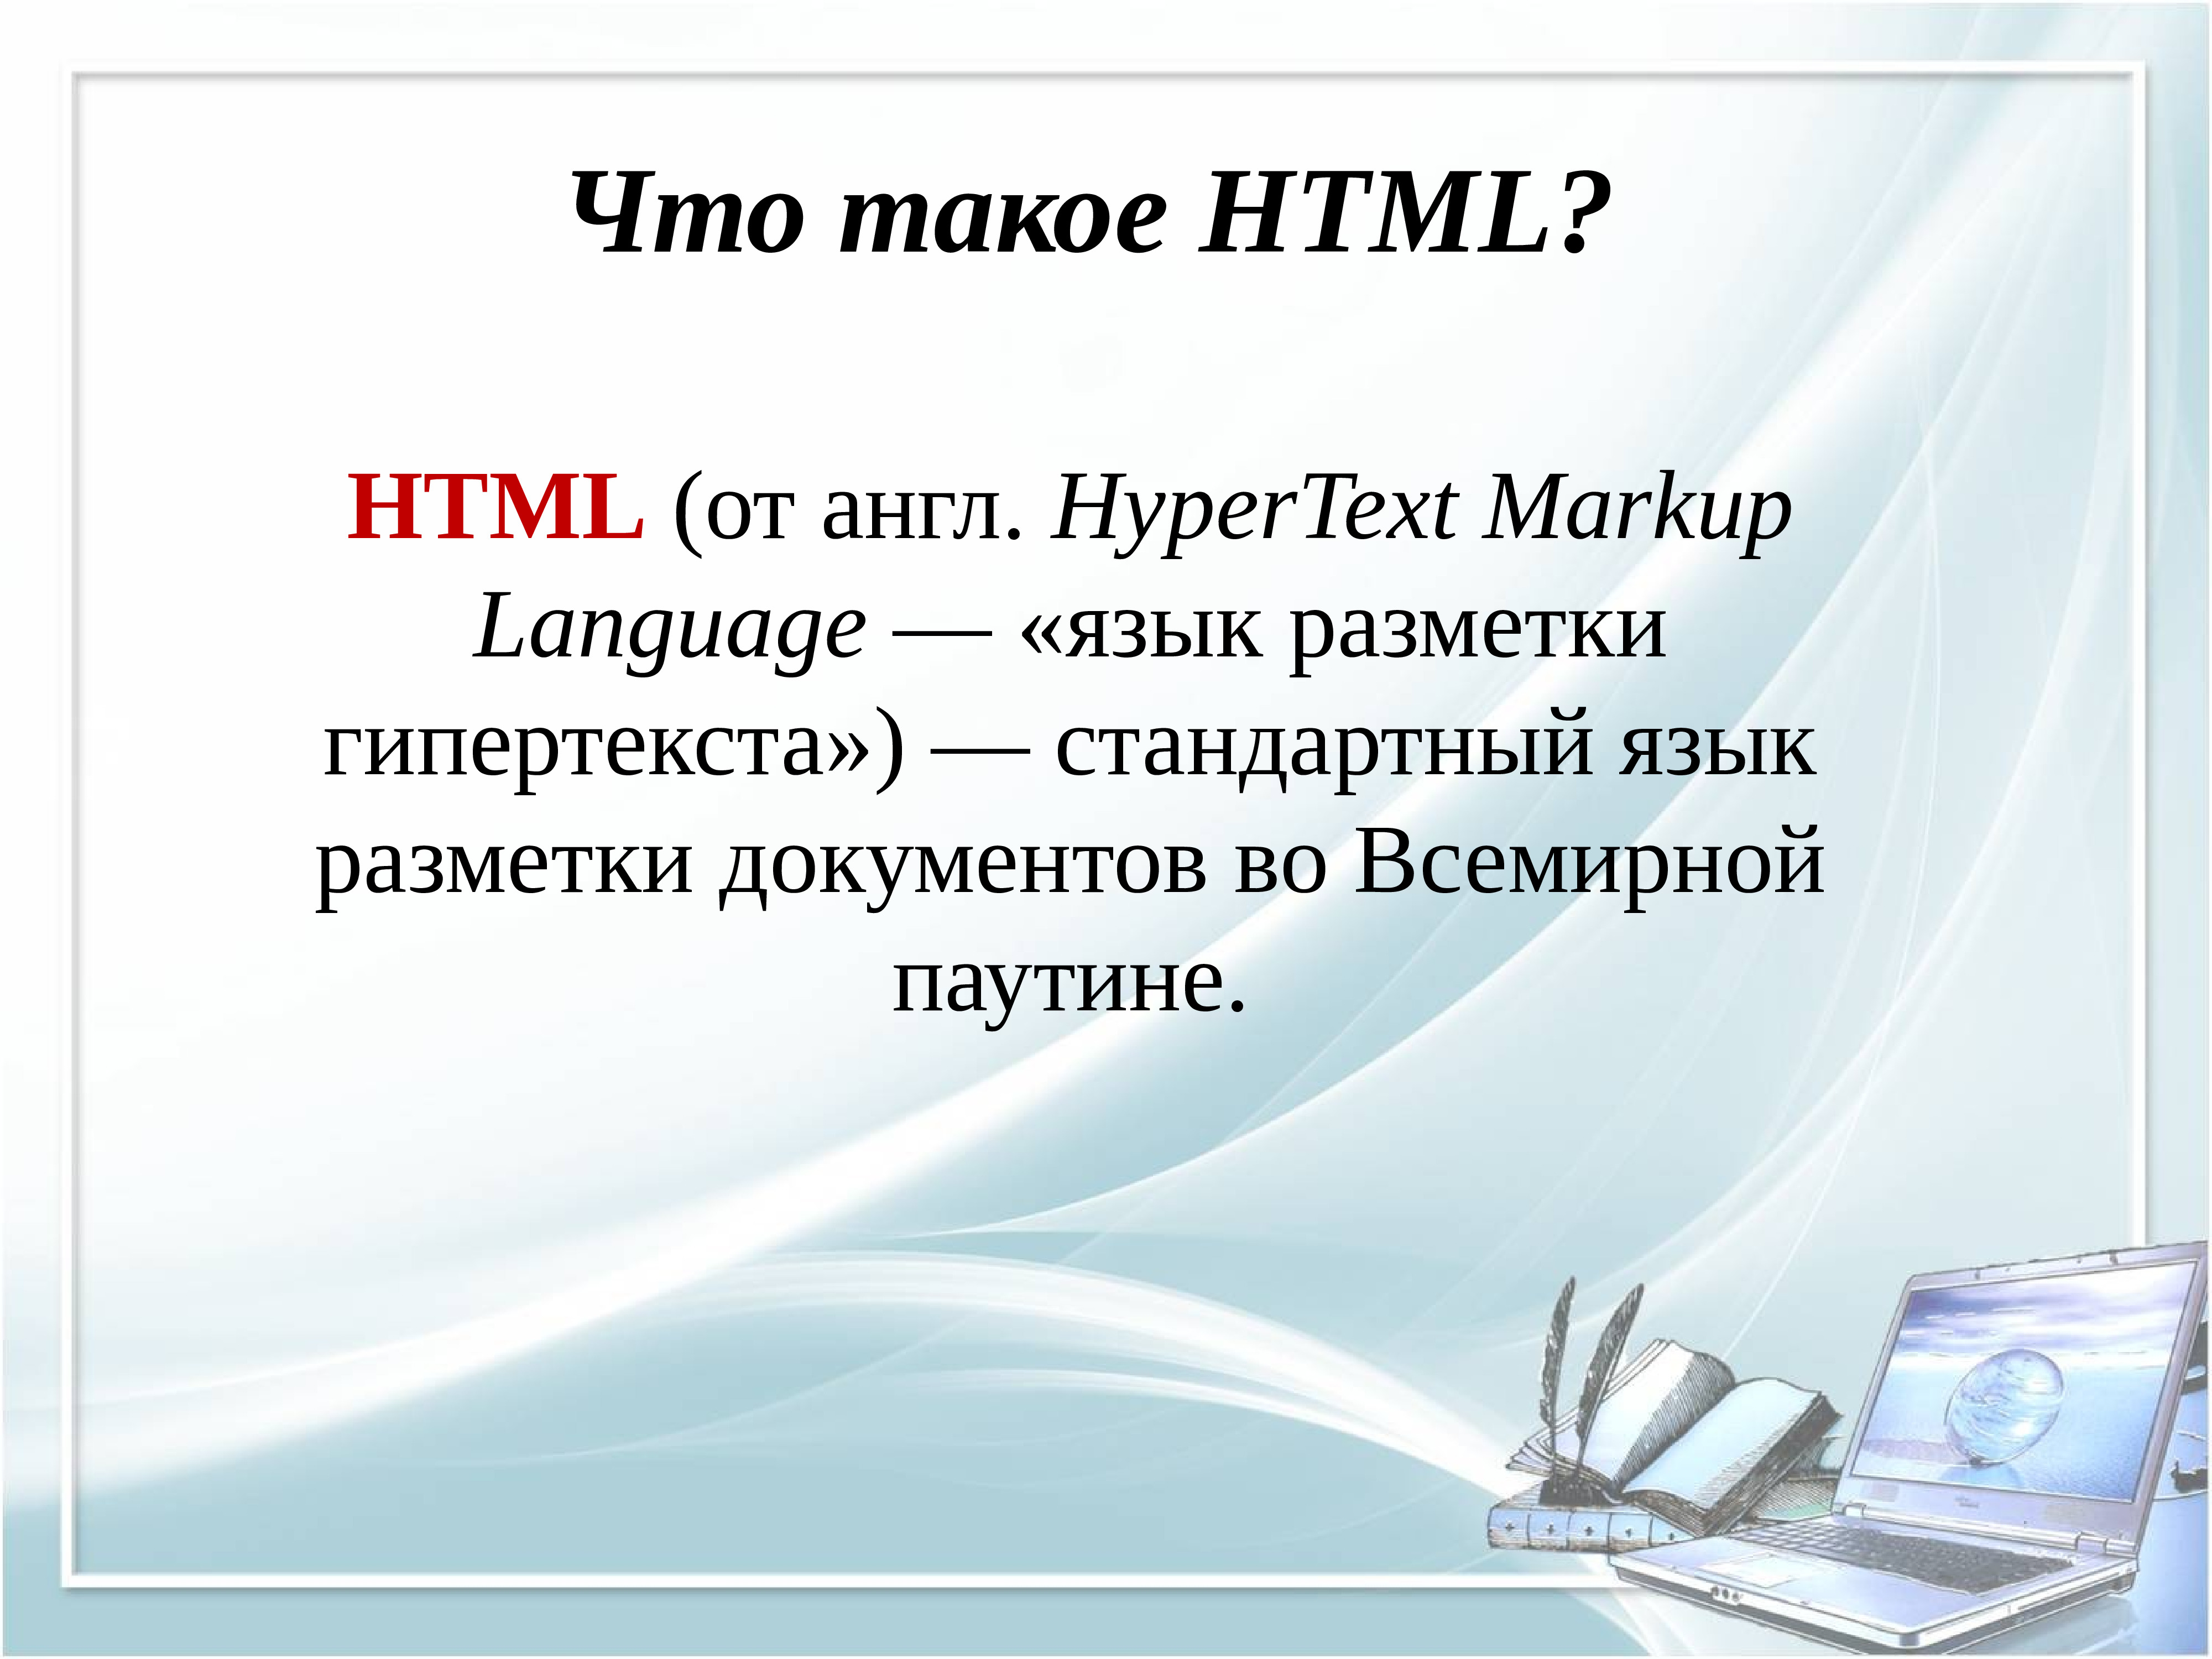 Работа с языком html. Основы языка html. Html презентация. Язык html Информатика. Основы html презентация.